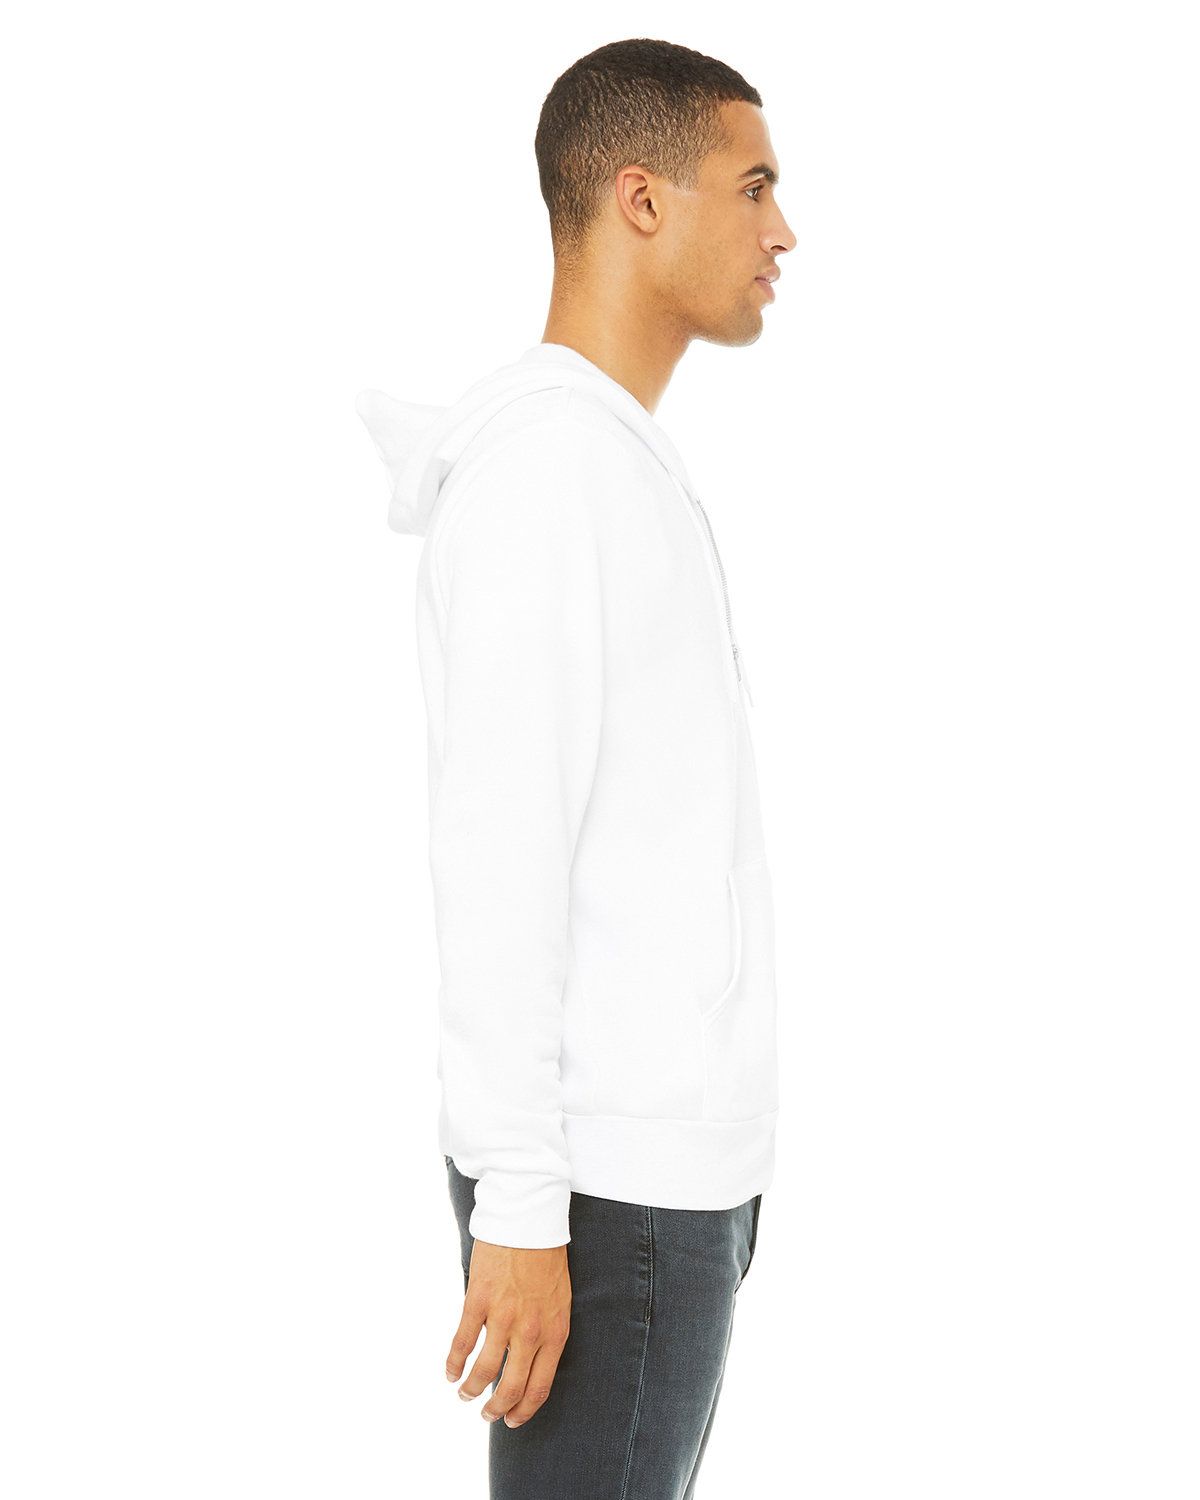 Bella + Canvas Unisex Poly-Cotton Fleece Full-Zip Hooded Sweatshirt